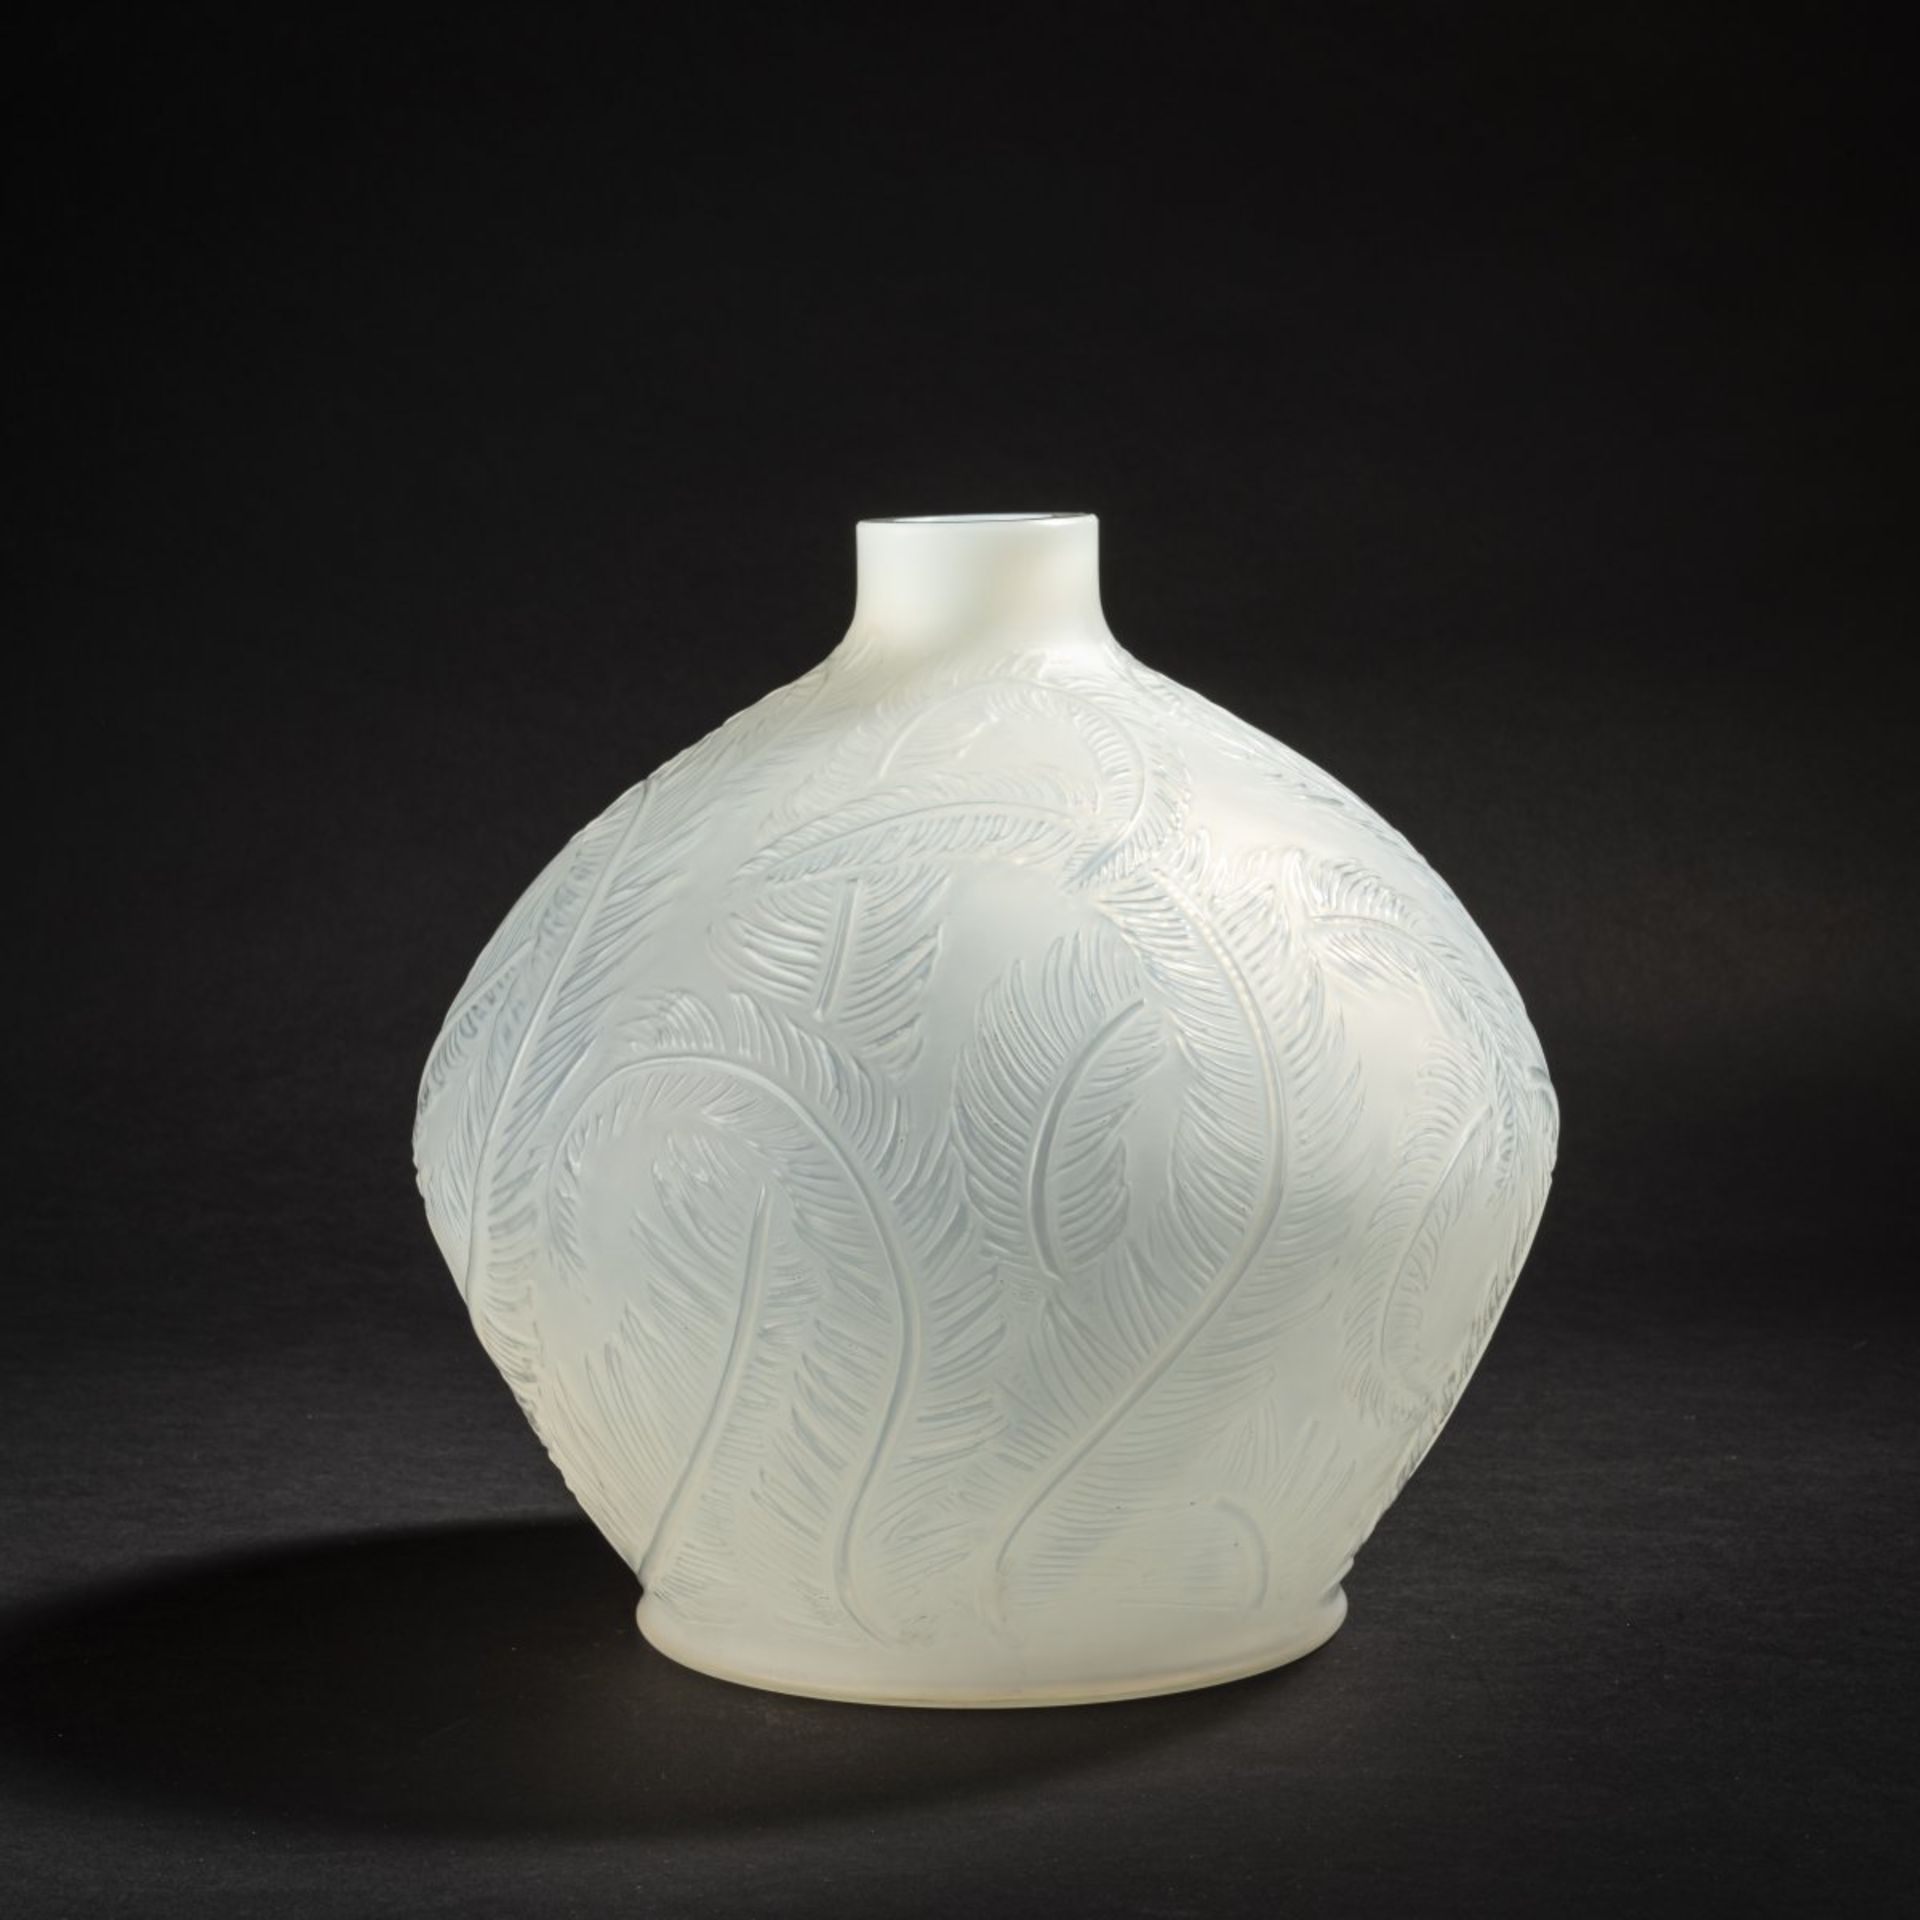 Suzanne Lalique, Vase 'Plumes', 1920 - Image 2 of 4